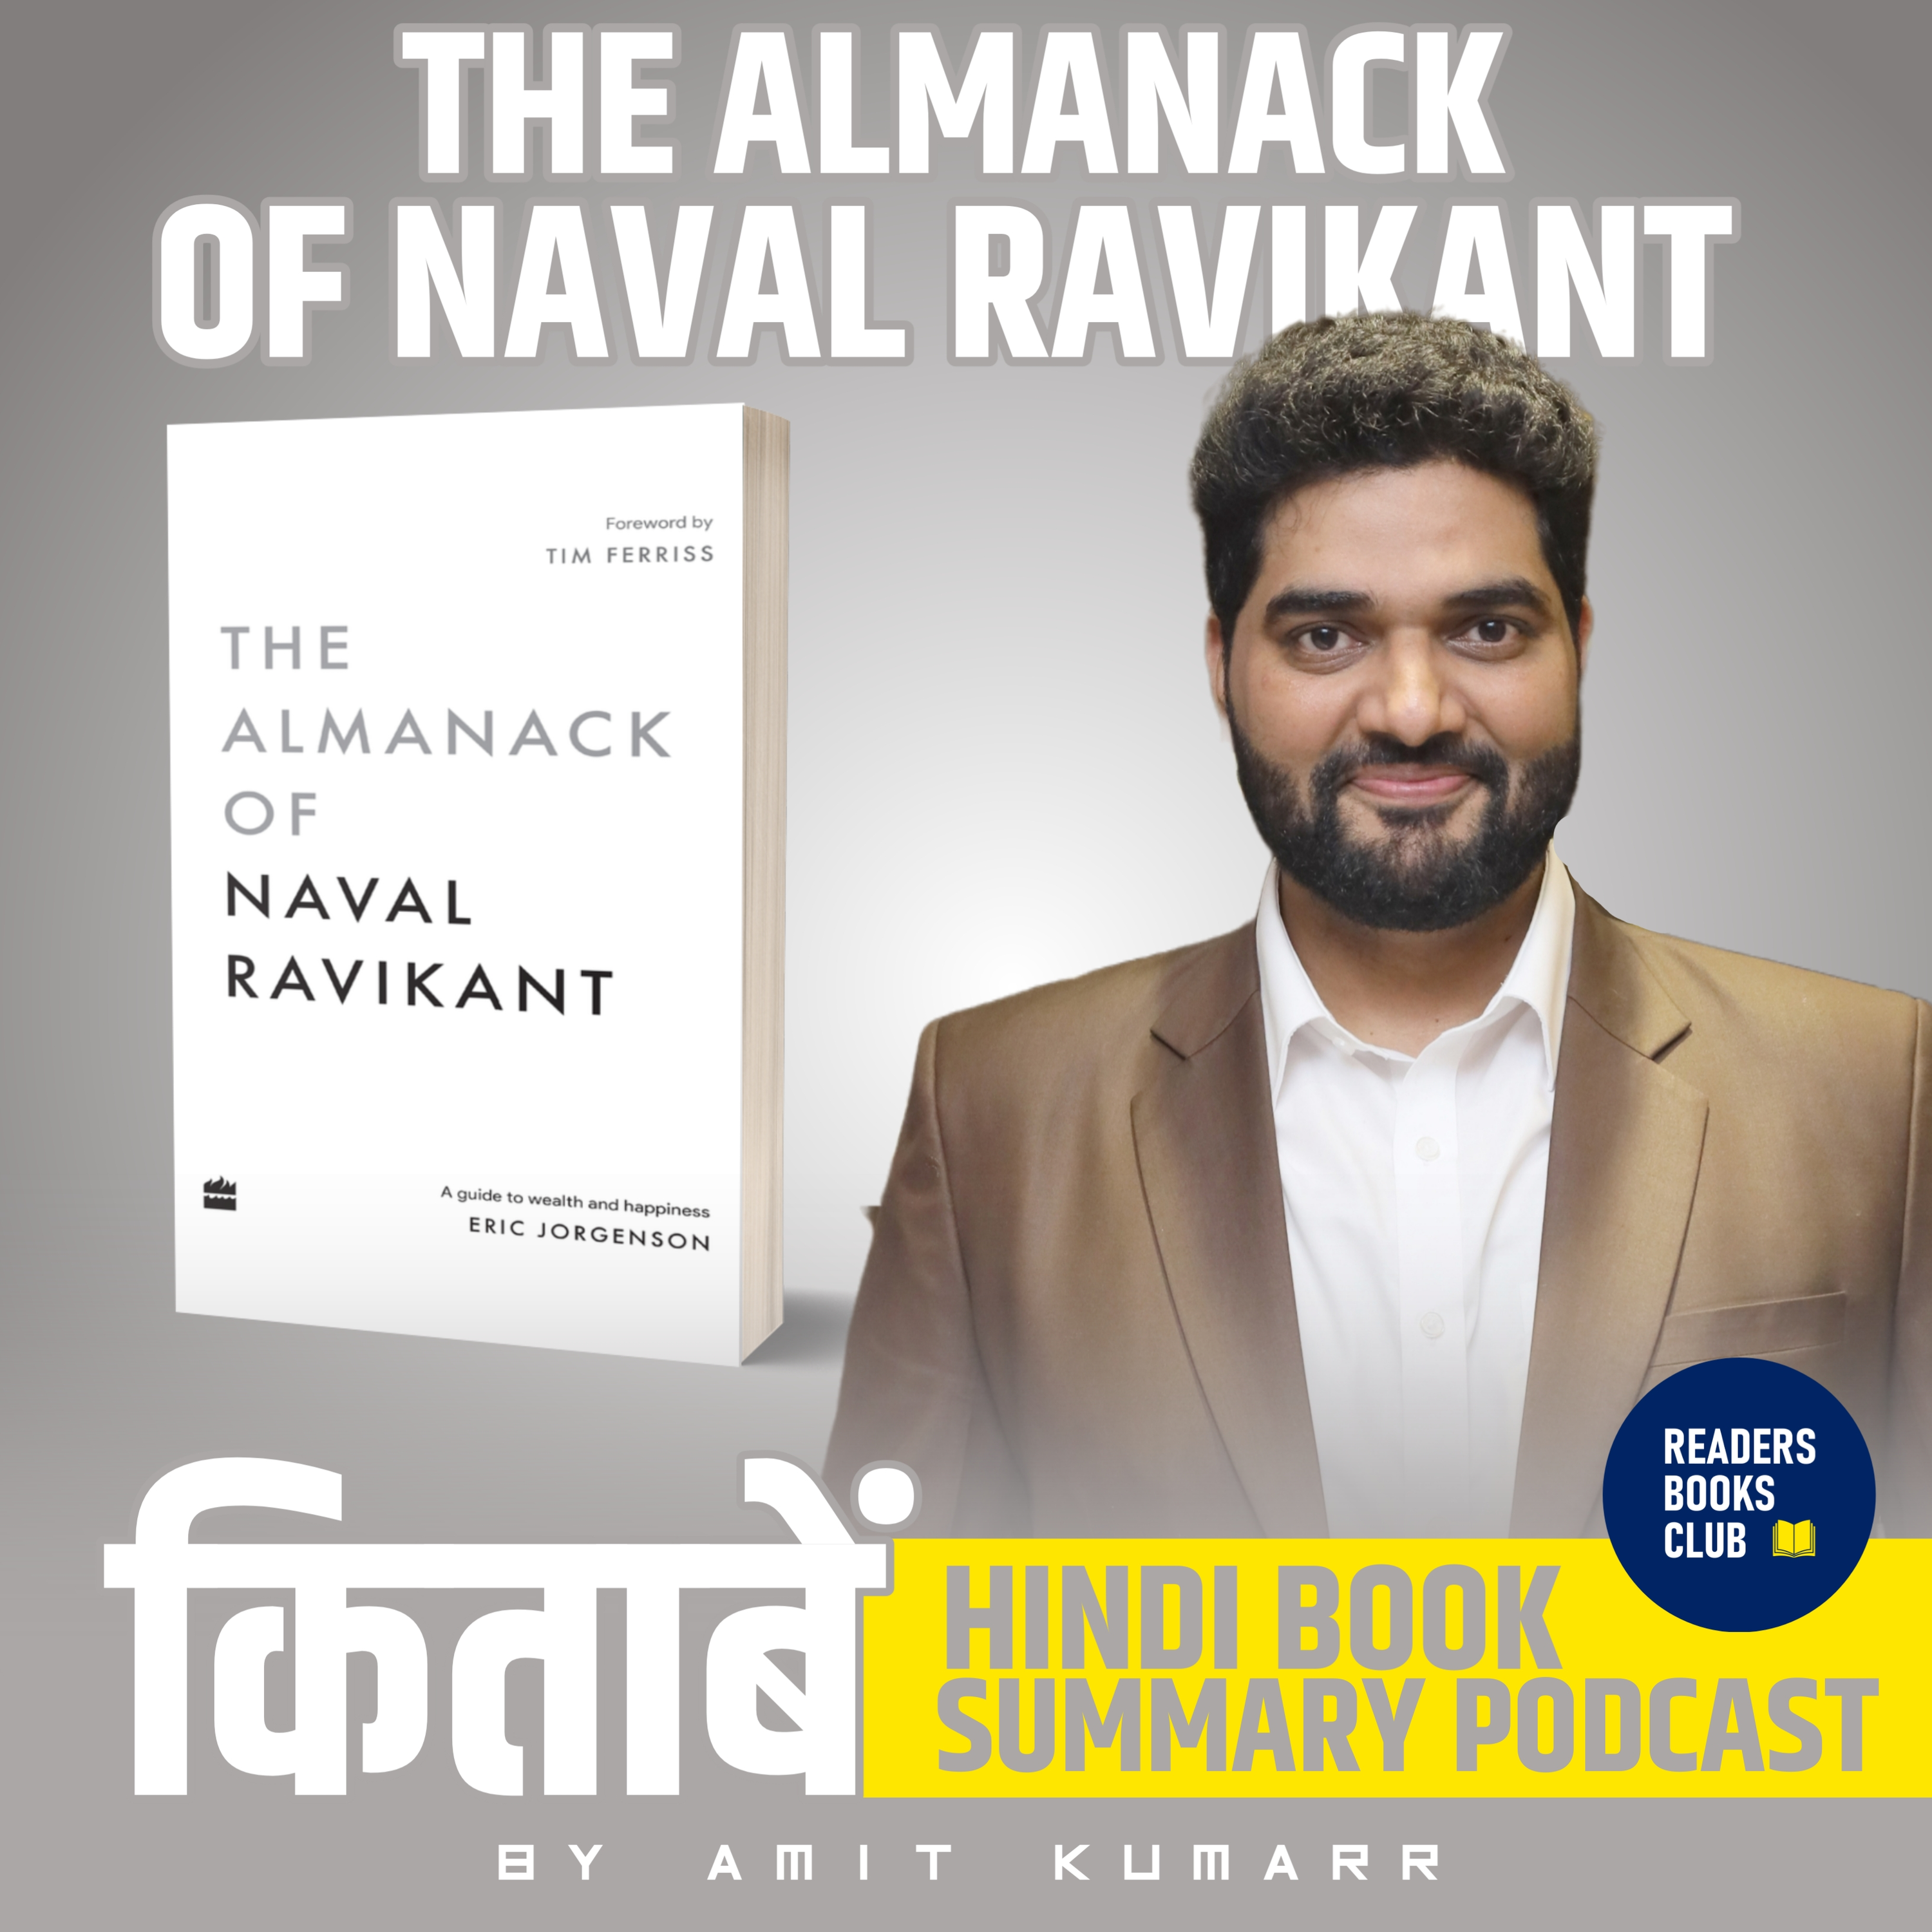 Summary of Eric Jorgenson's The Almanack of Naval Ravikant on Apple Books